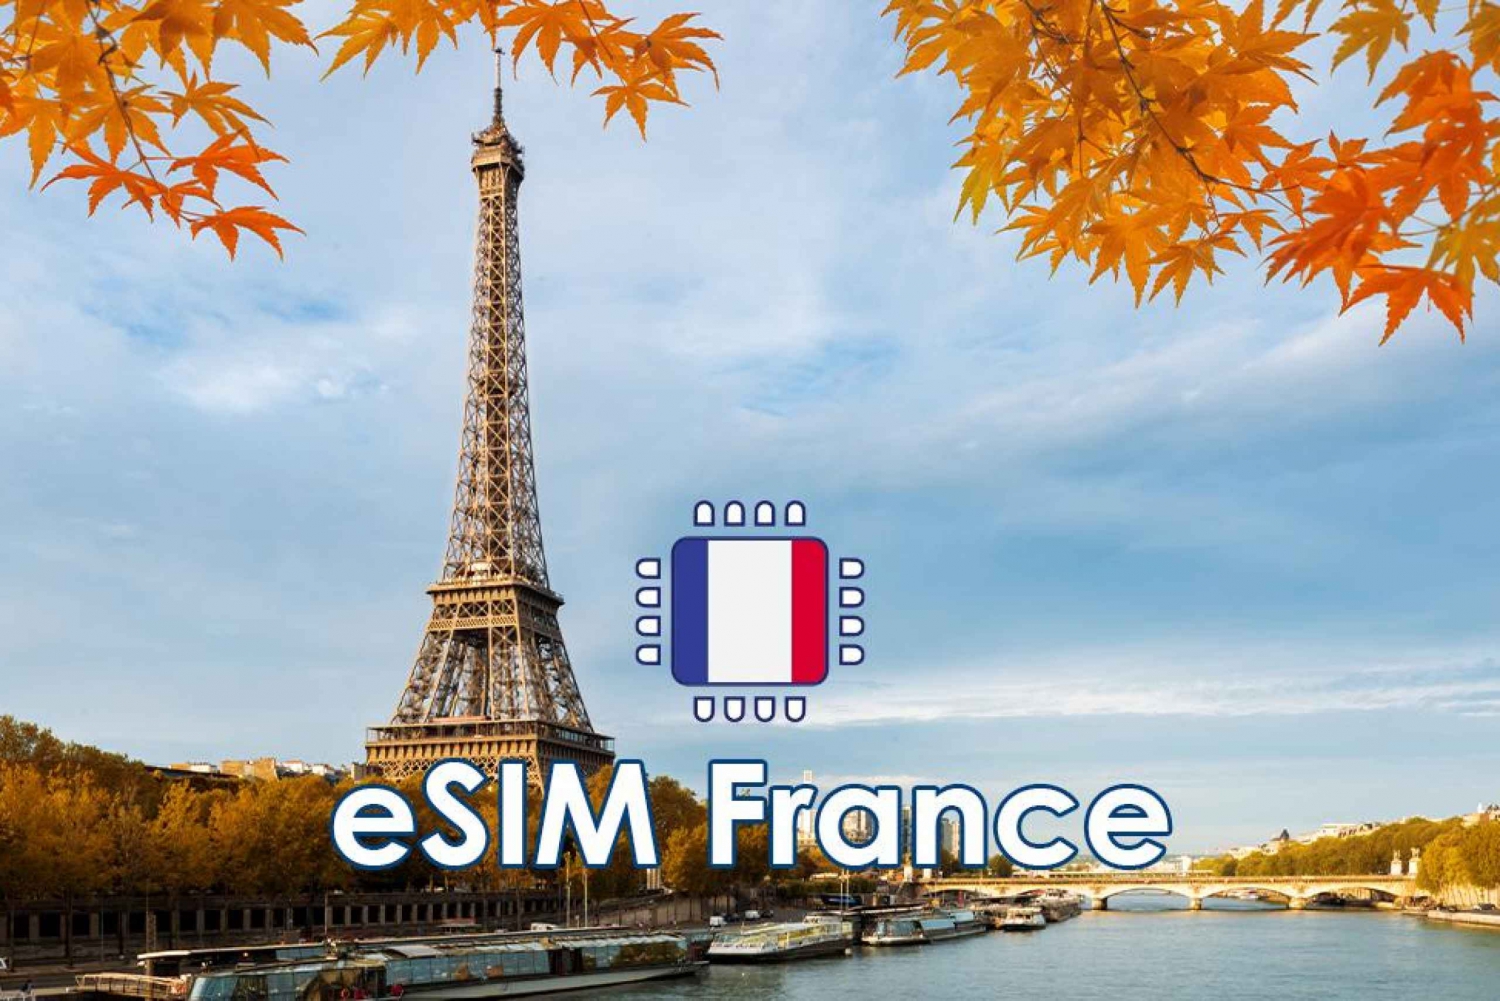 Ranska: eSIM-mobiilidatapaketti - 3GB